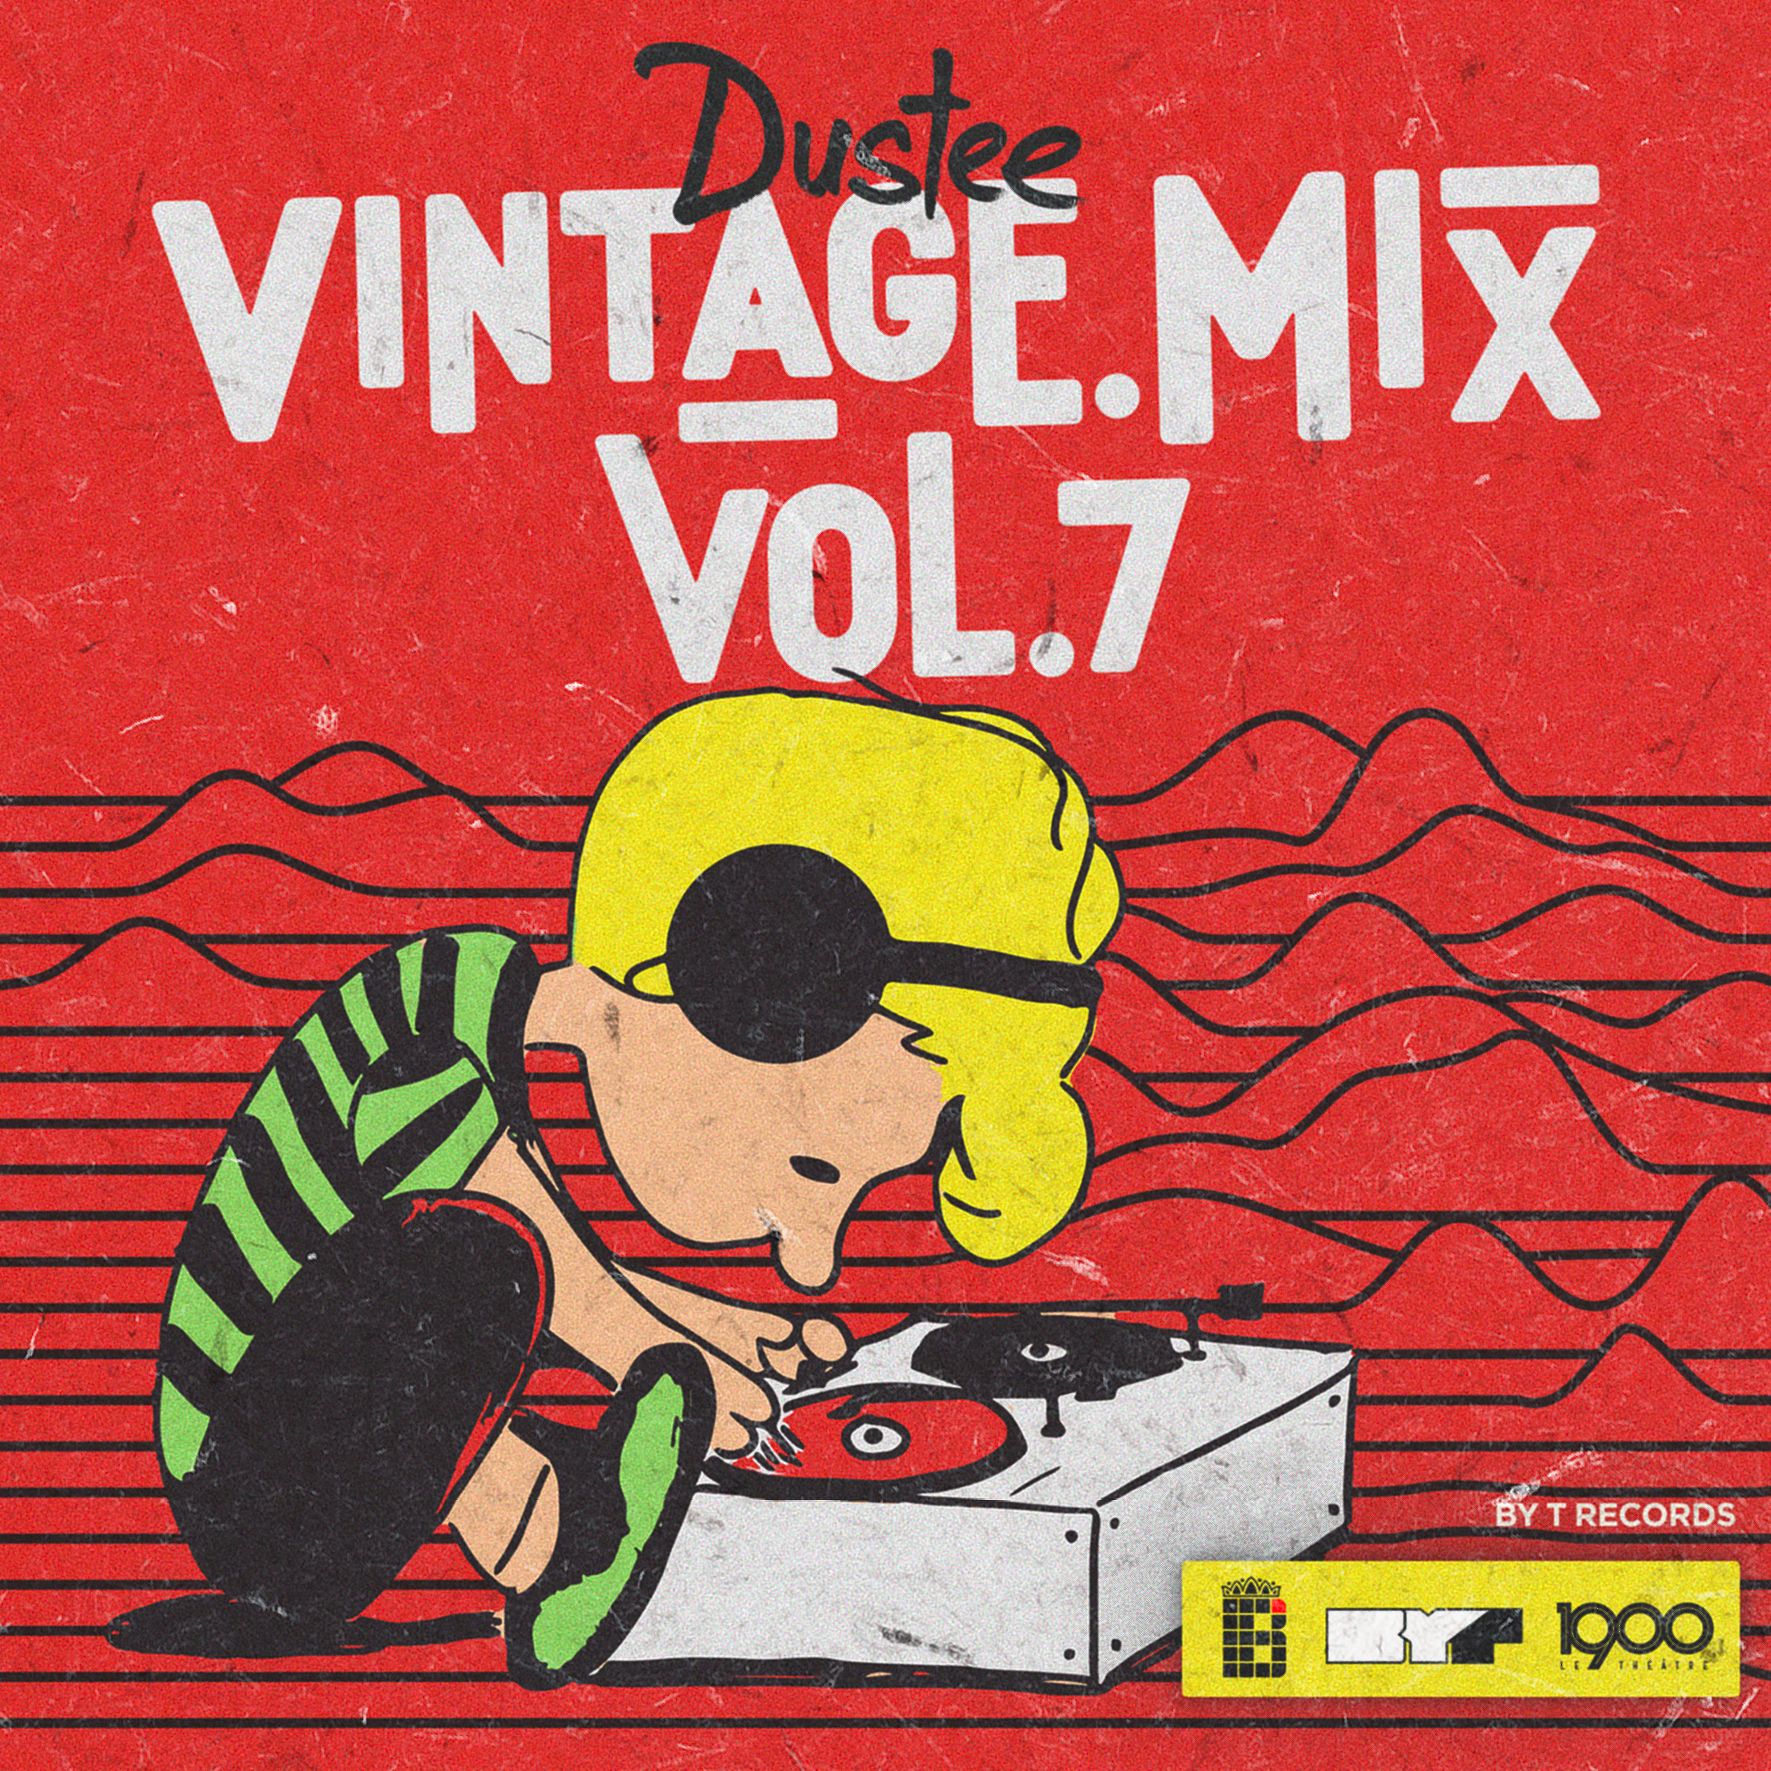 Download DUSTEE - VINTAGE MIX Vol.7 (28.01.16 - 1900 Opening)